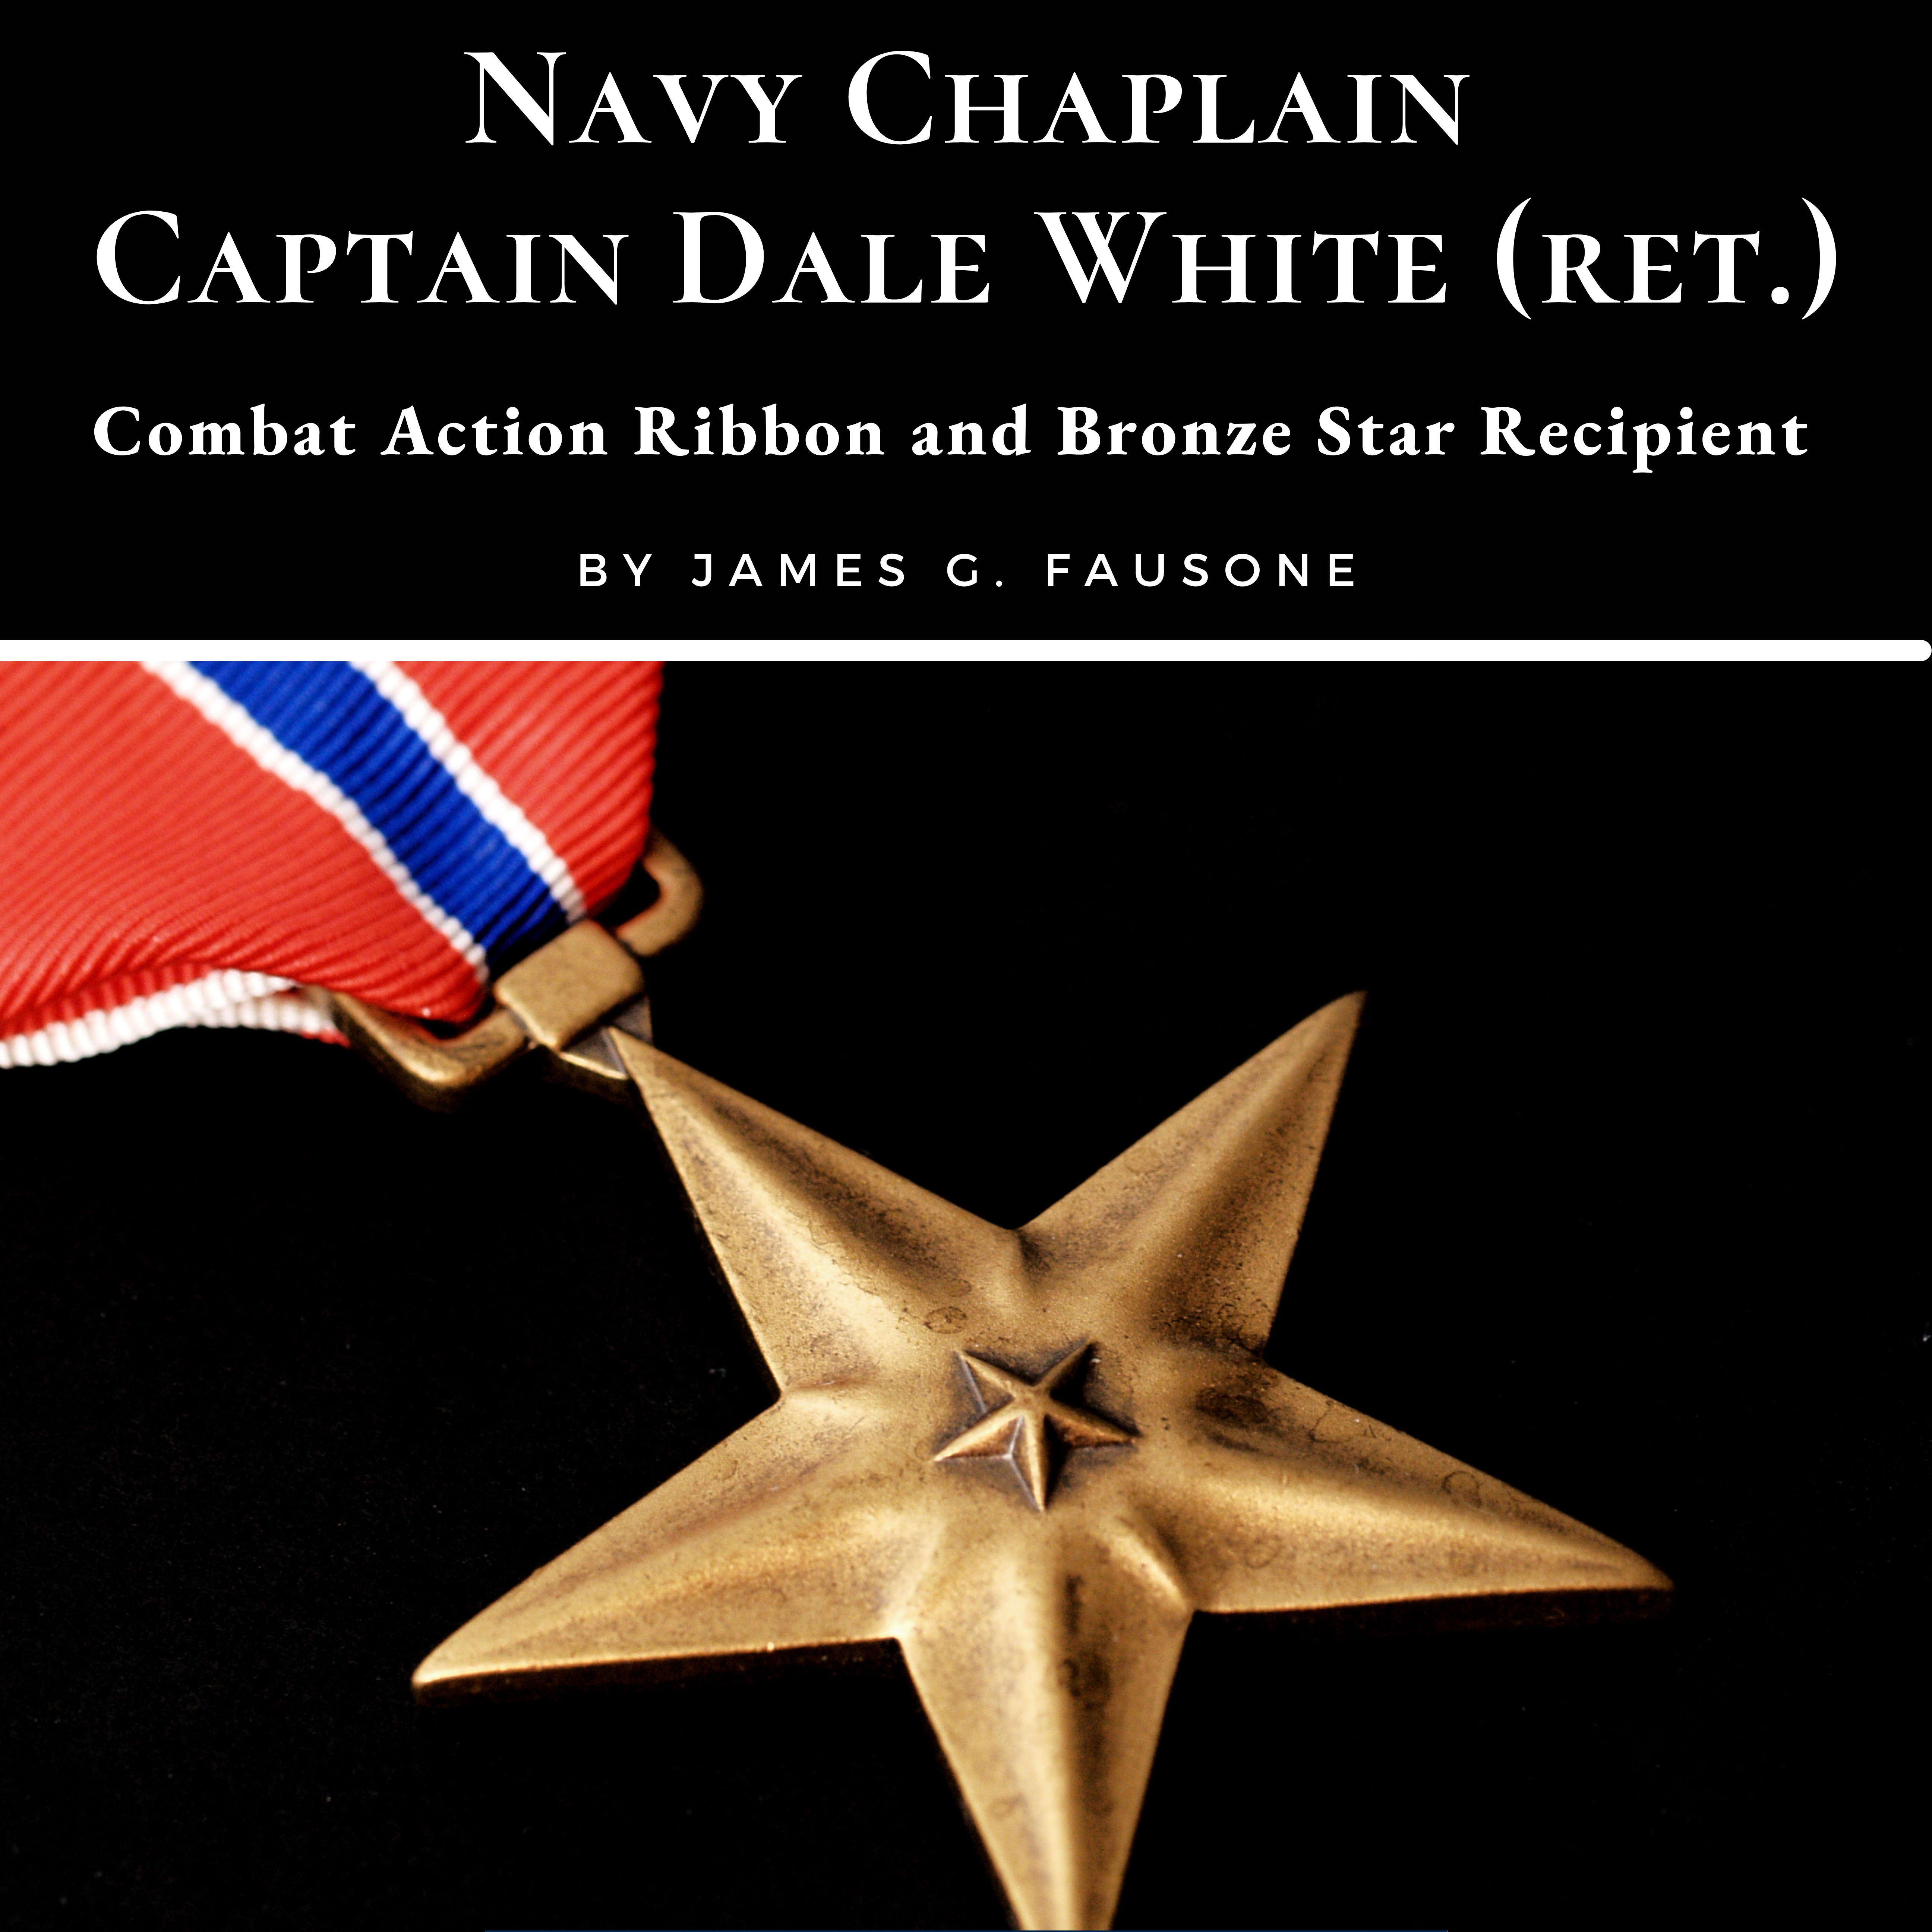 Navy Chaplain Capt. Dale White